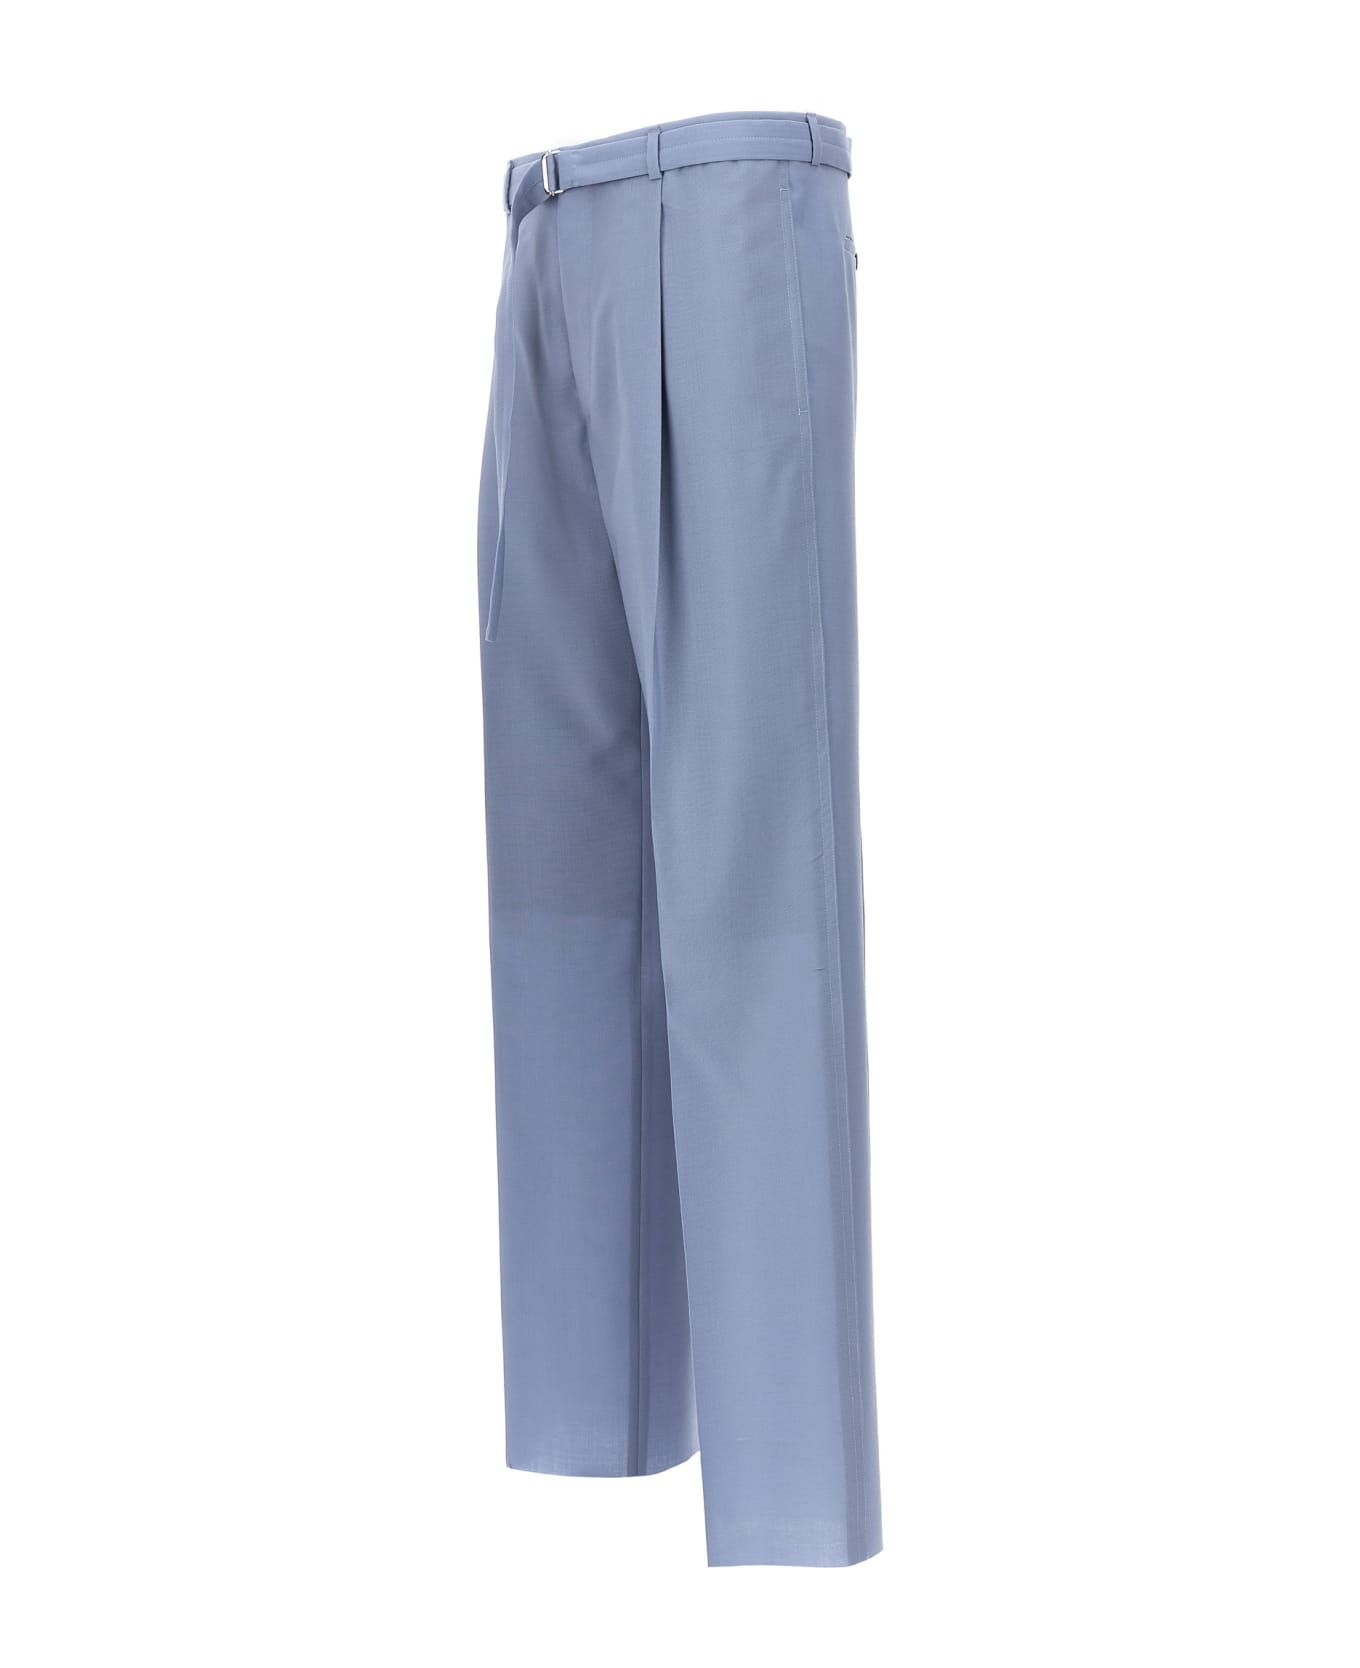 Lanvin Front Pleat Pants - Light Blue ボトムス